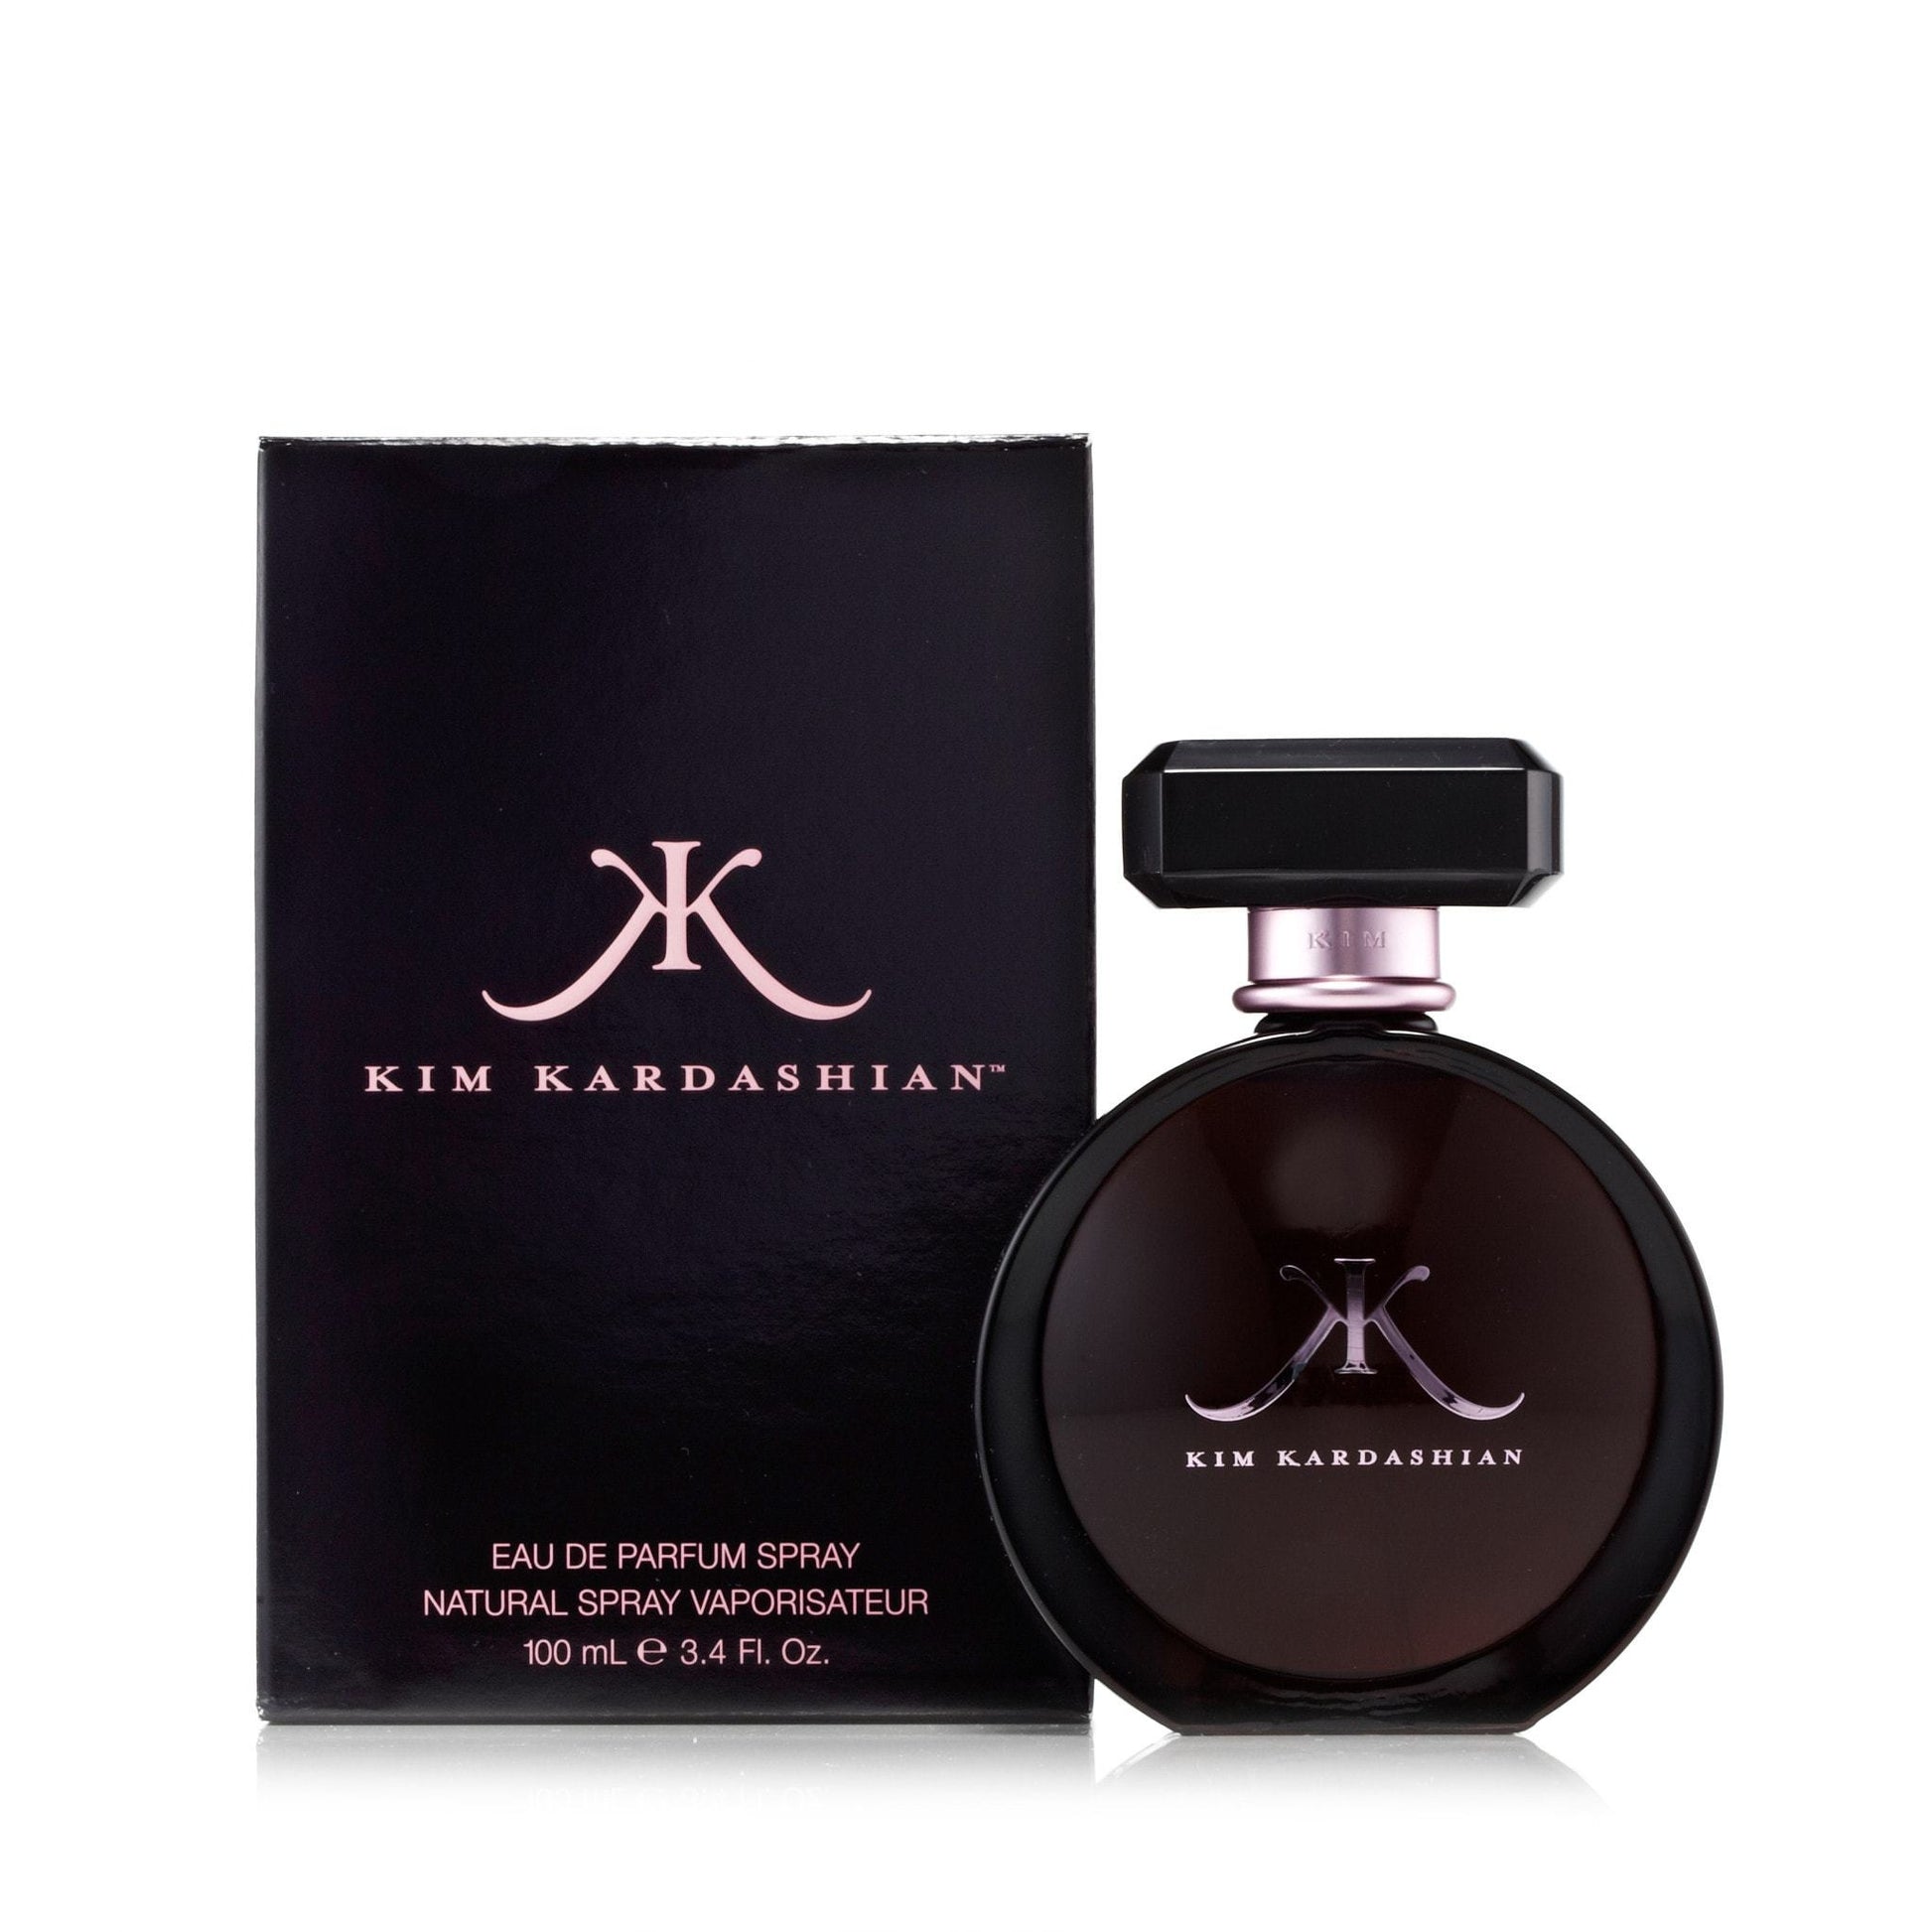 Kim Kardashian Eau de Parfum Spray for Women by Kim Kardashian, Product image 2